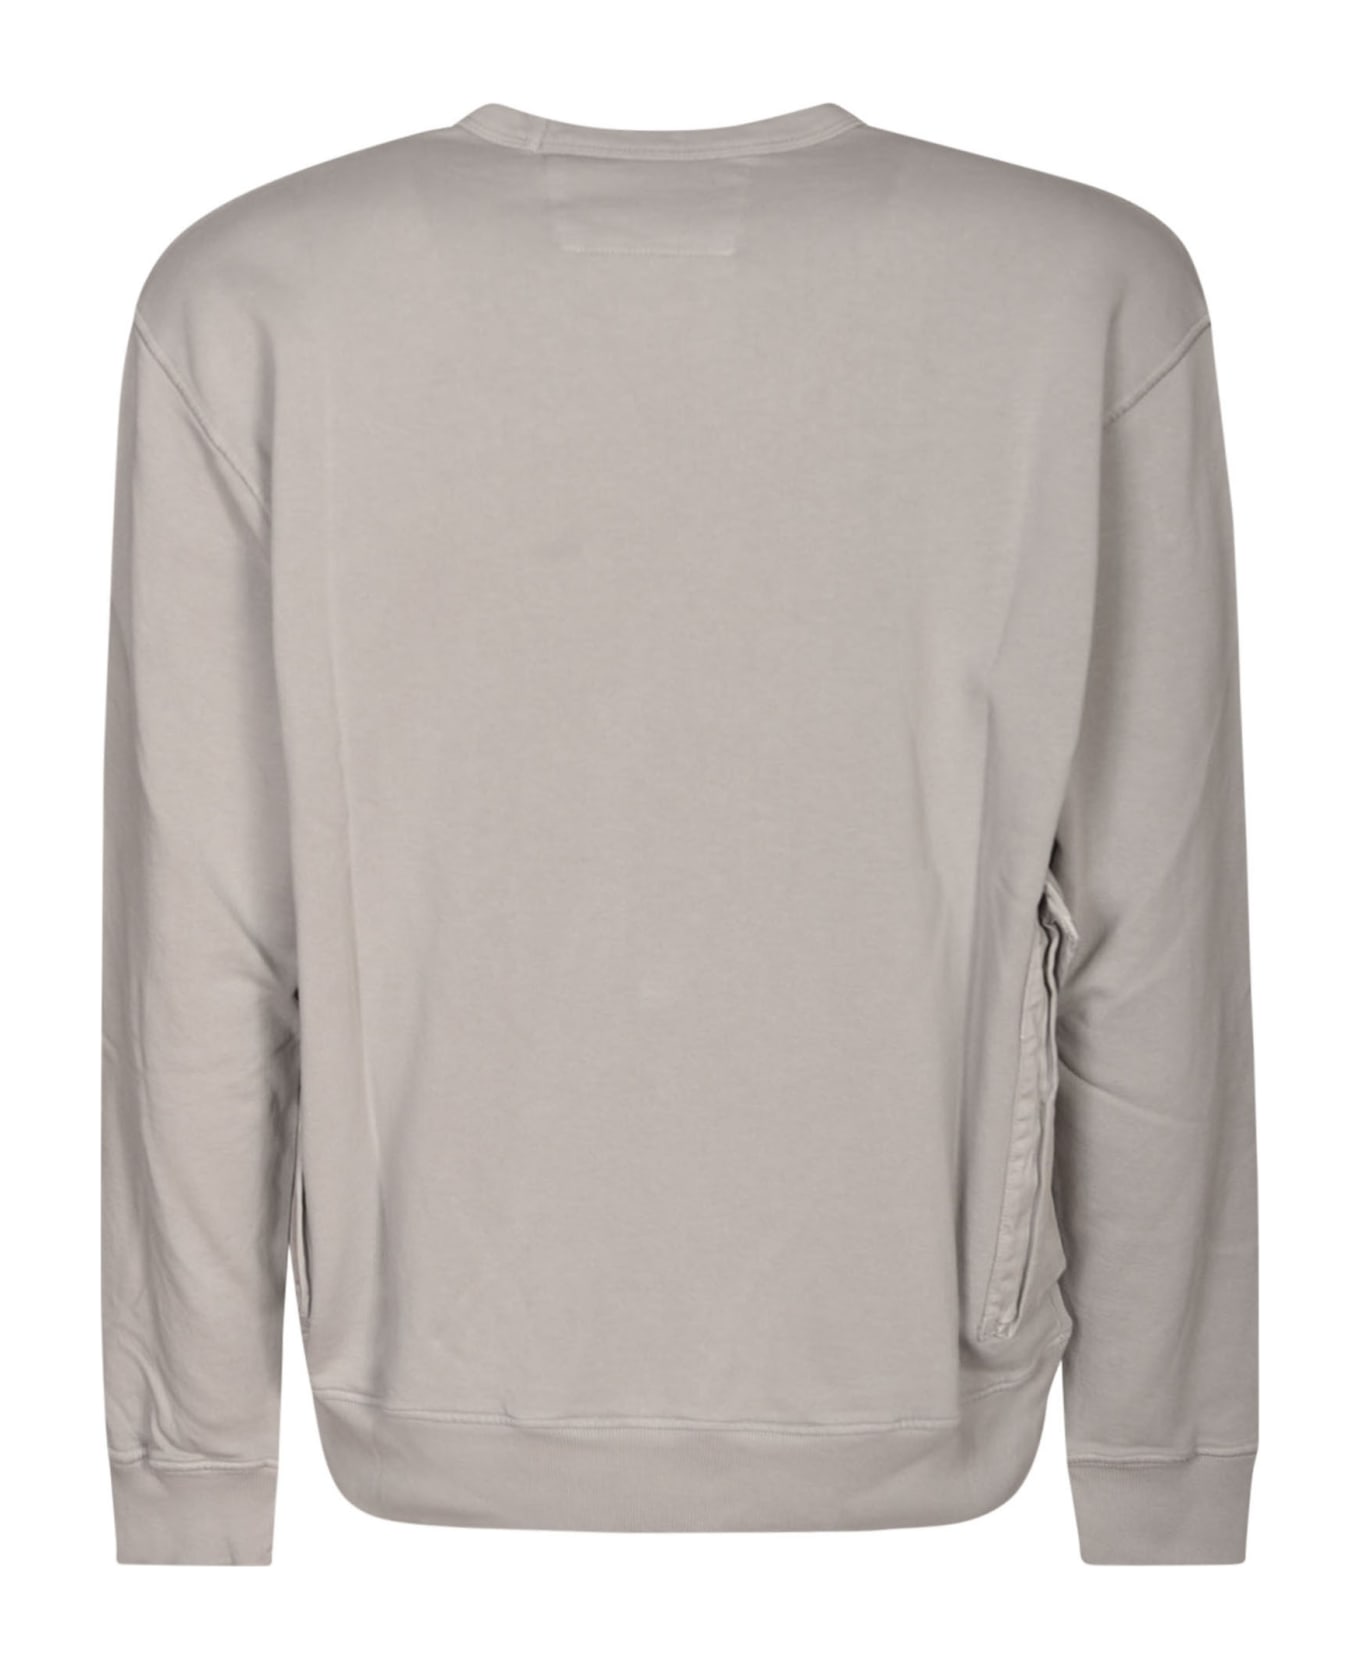 C.P. Company Logo Sweatshirt - Drizzle Grey